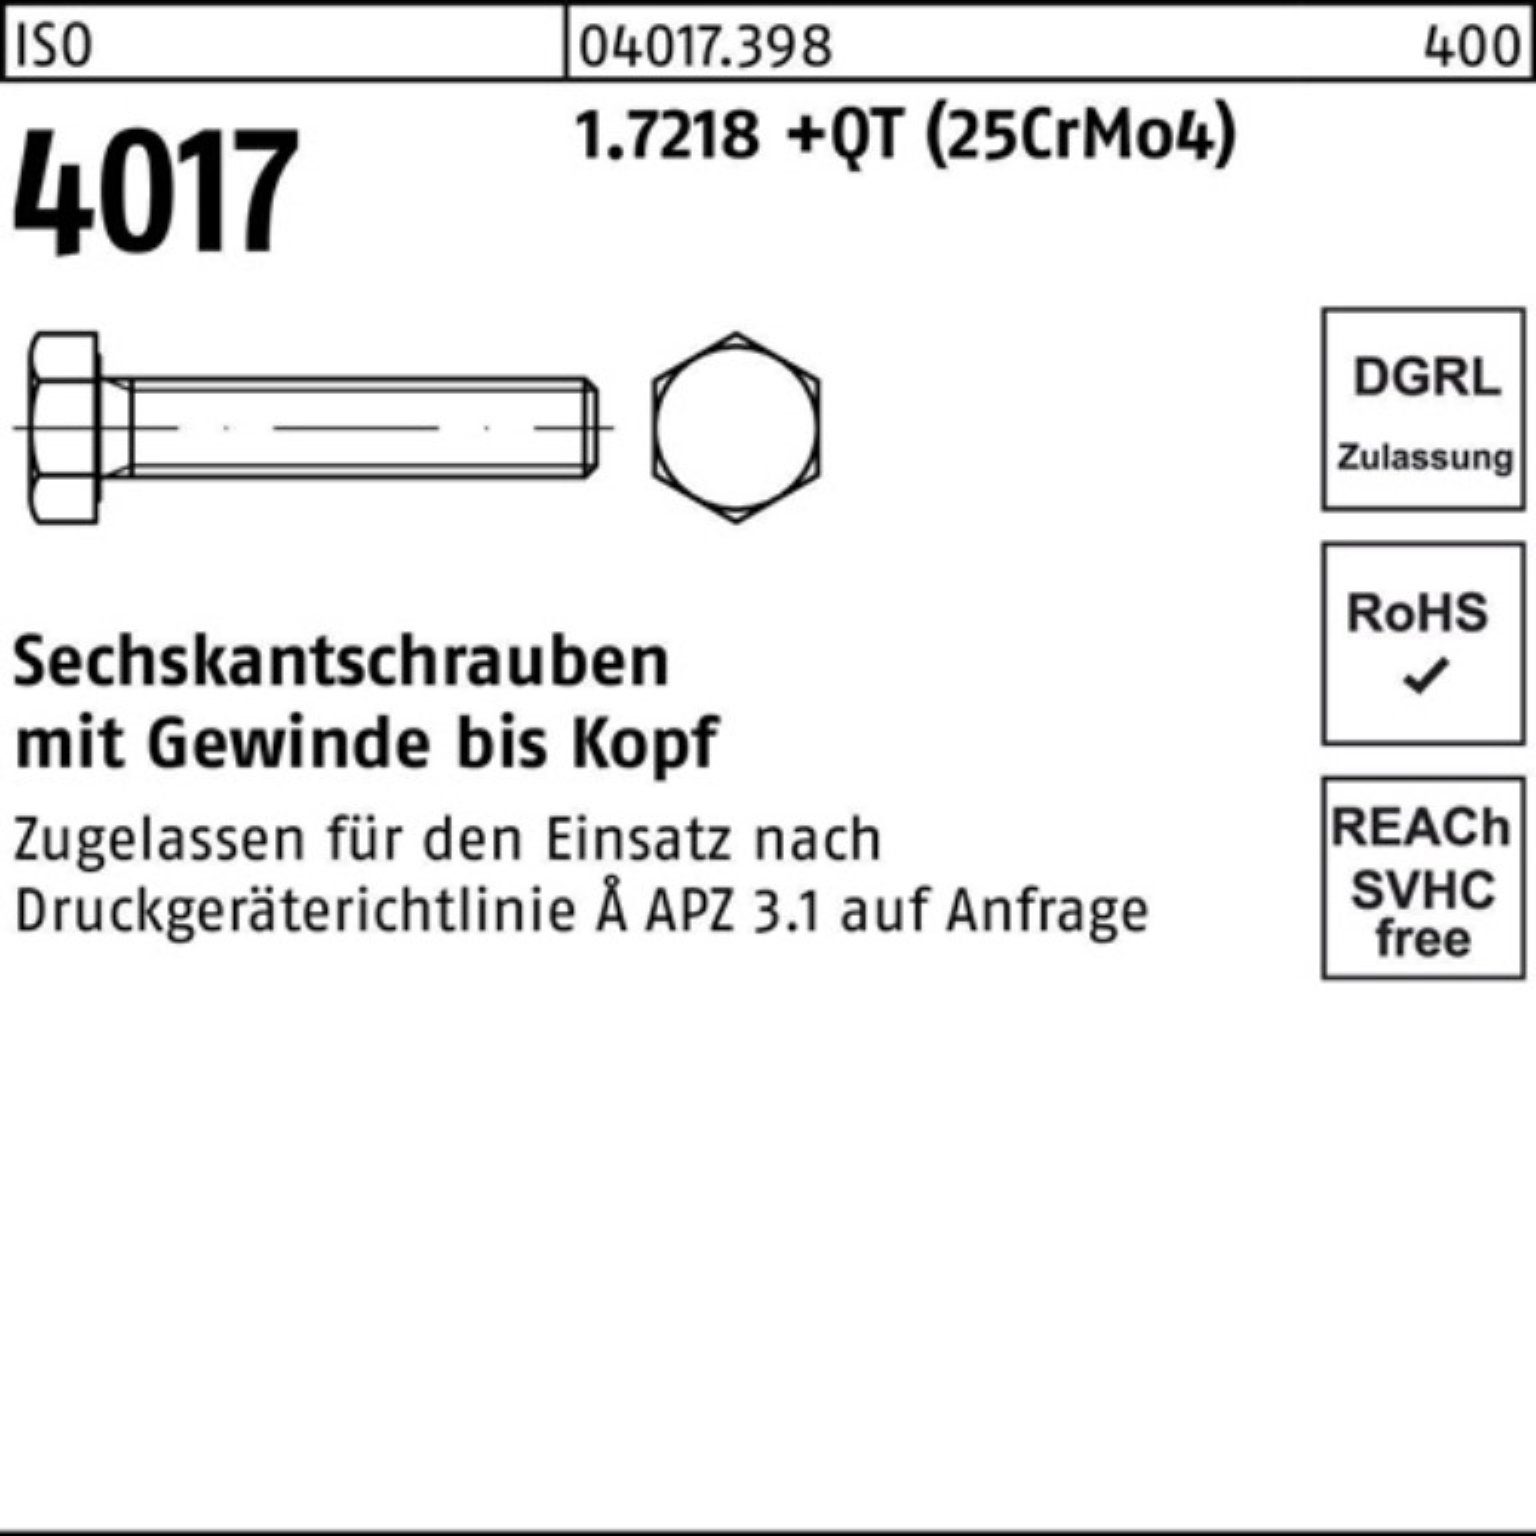 75 VG ISO Bufab (25CrMo4) 1.7218 +QT M20x 4017 Sechskantschraube 100er Pack Sechskantschraube